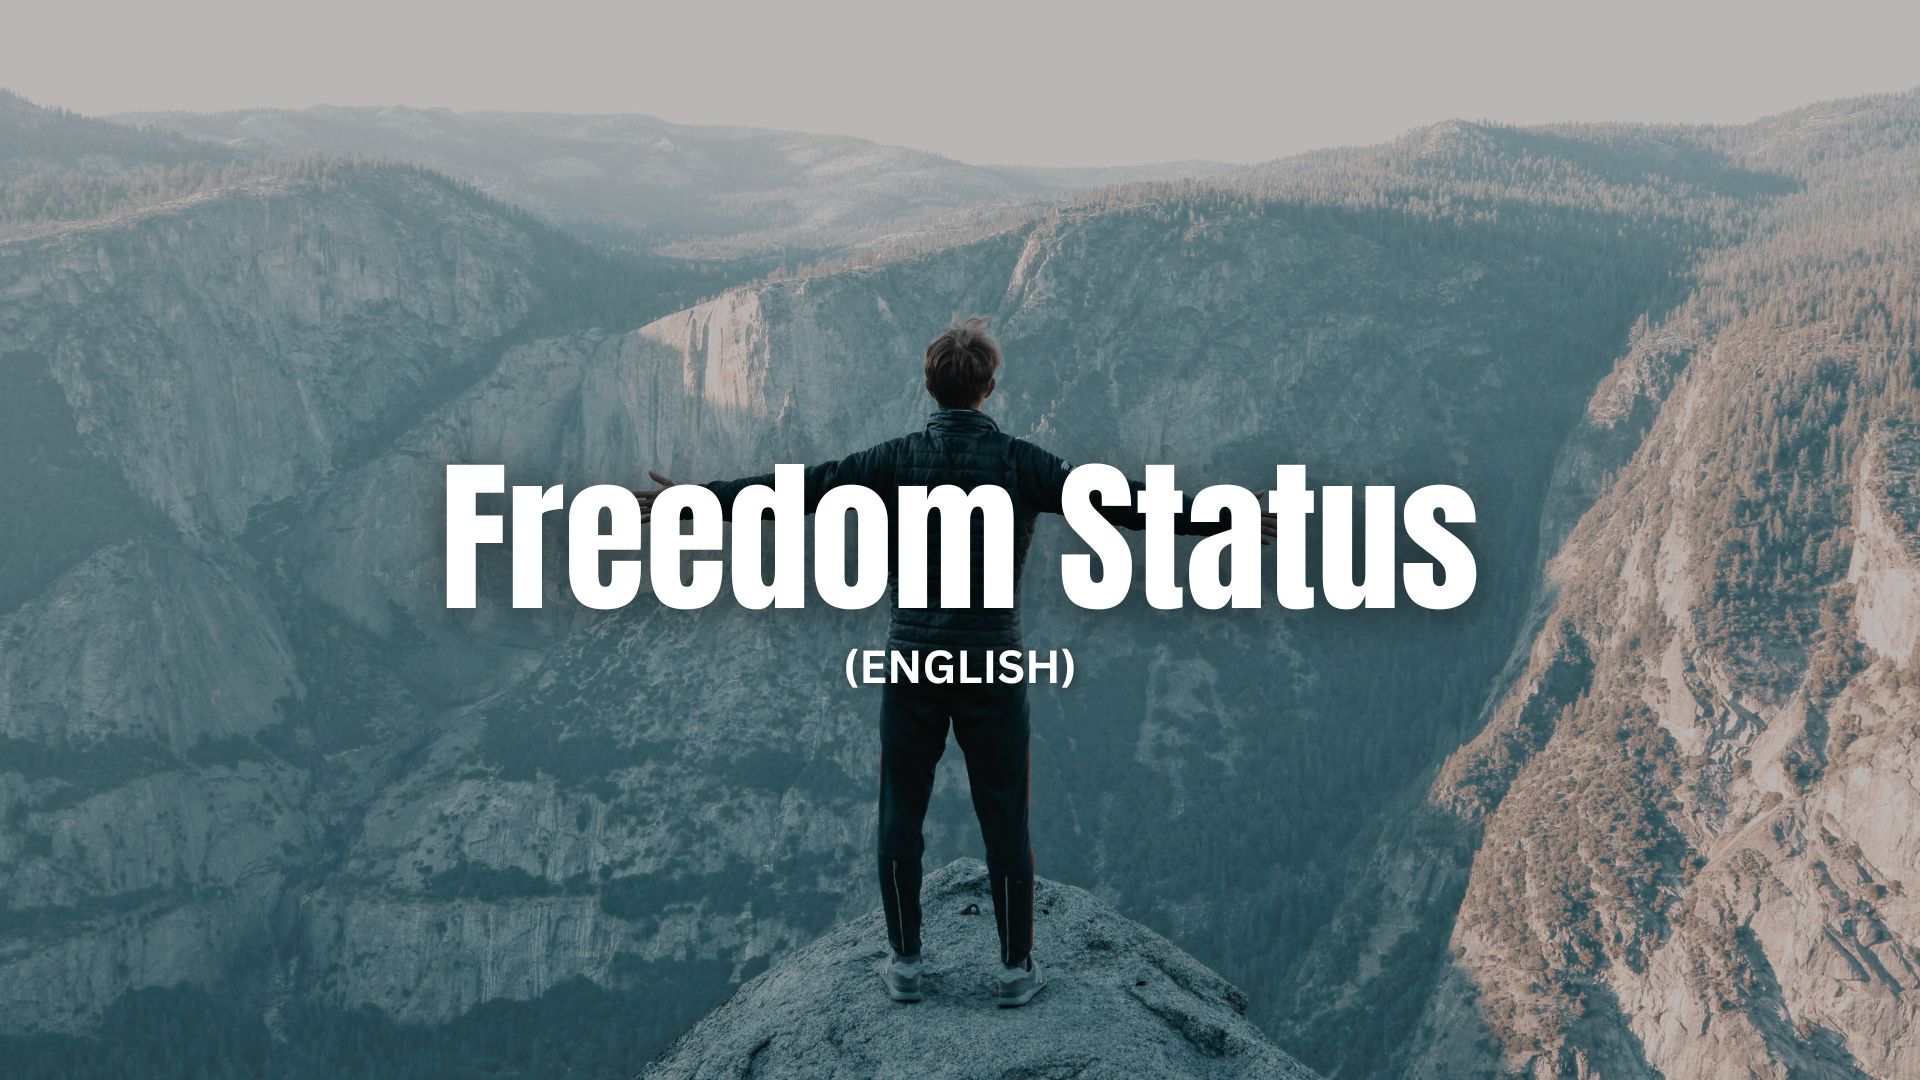 Freedom Status in English